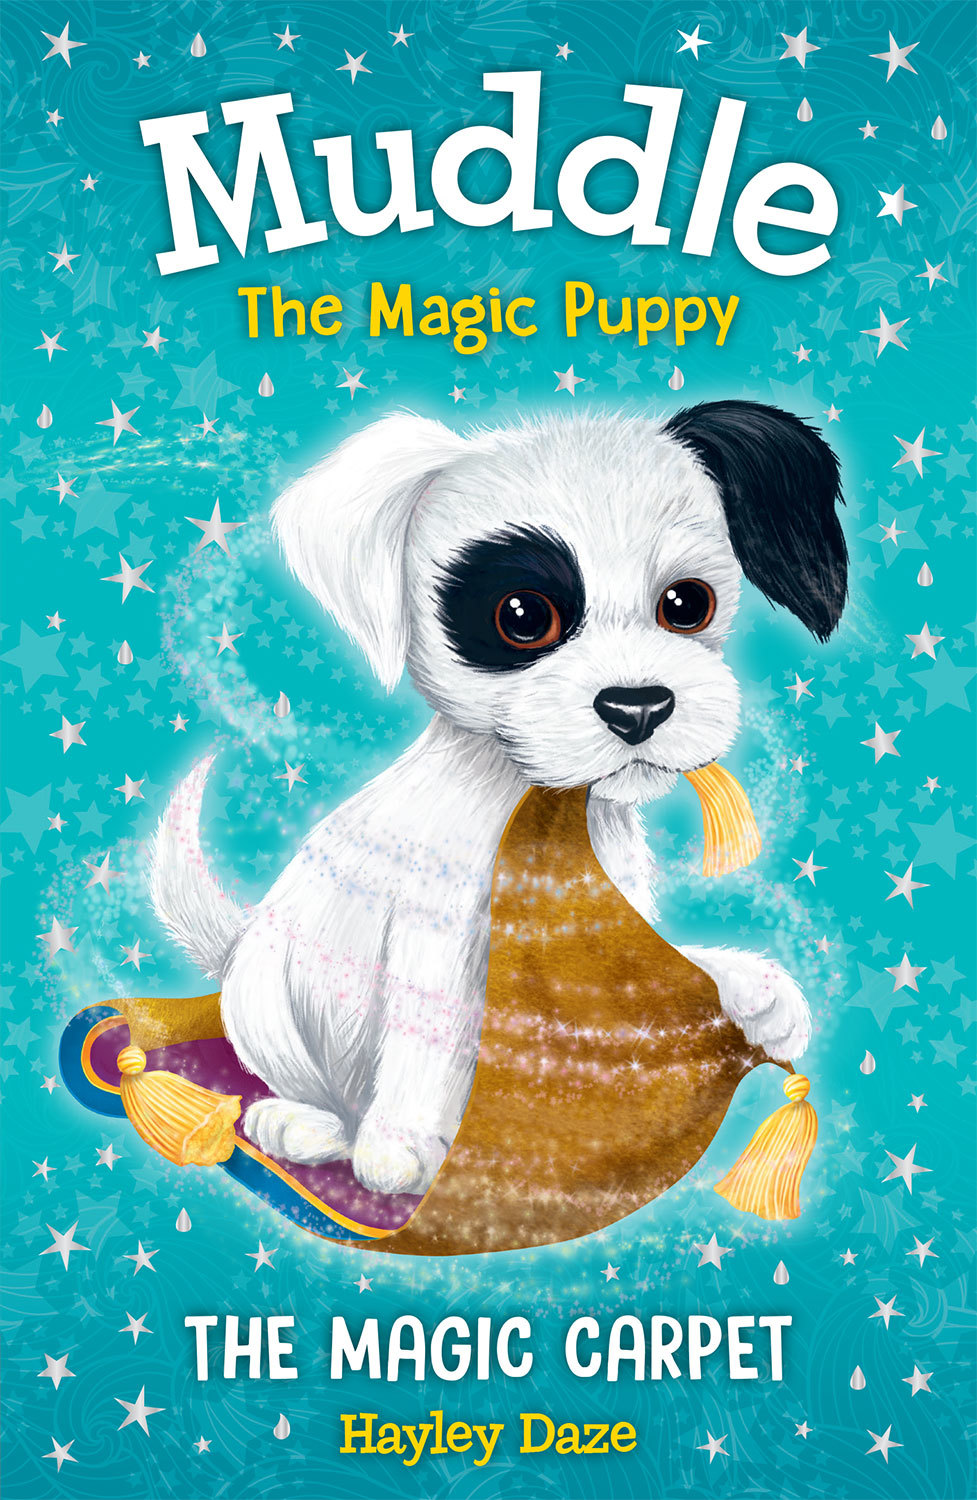 MUDDLE THE MAGIC PUPPY BOOK 1: THE MAGIC CARPET